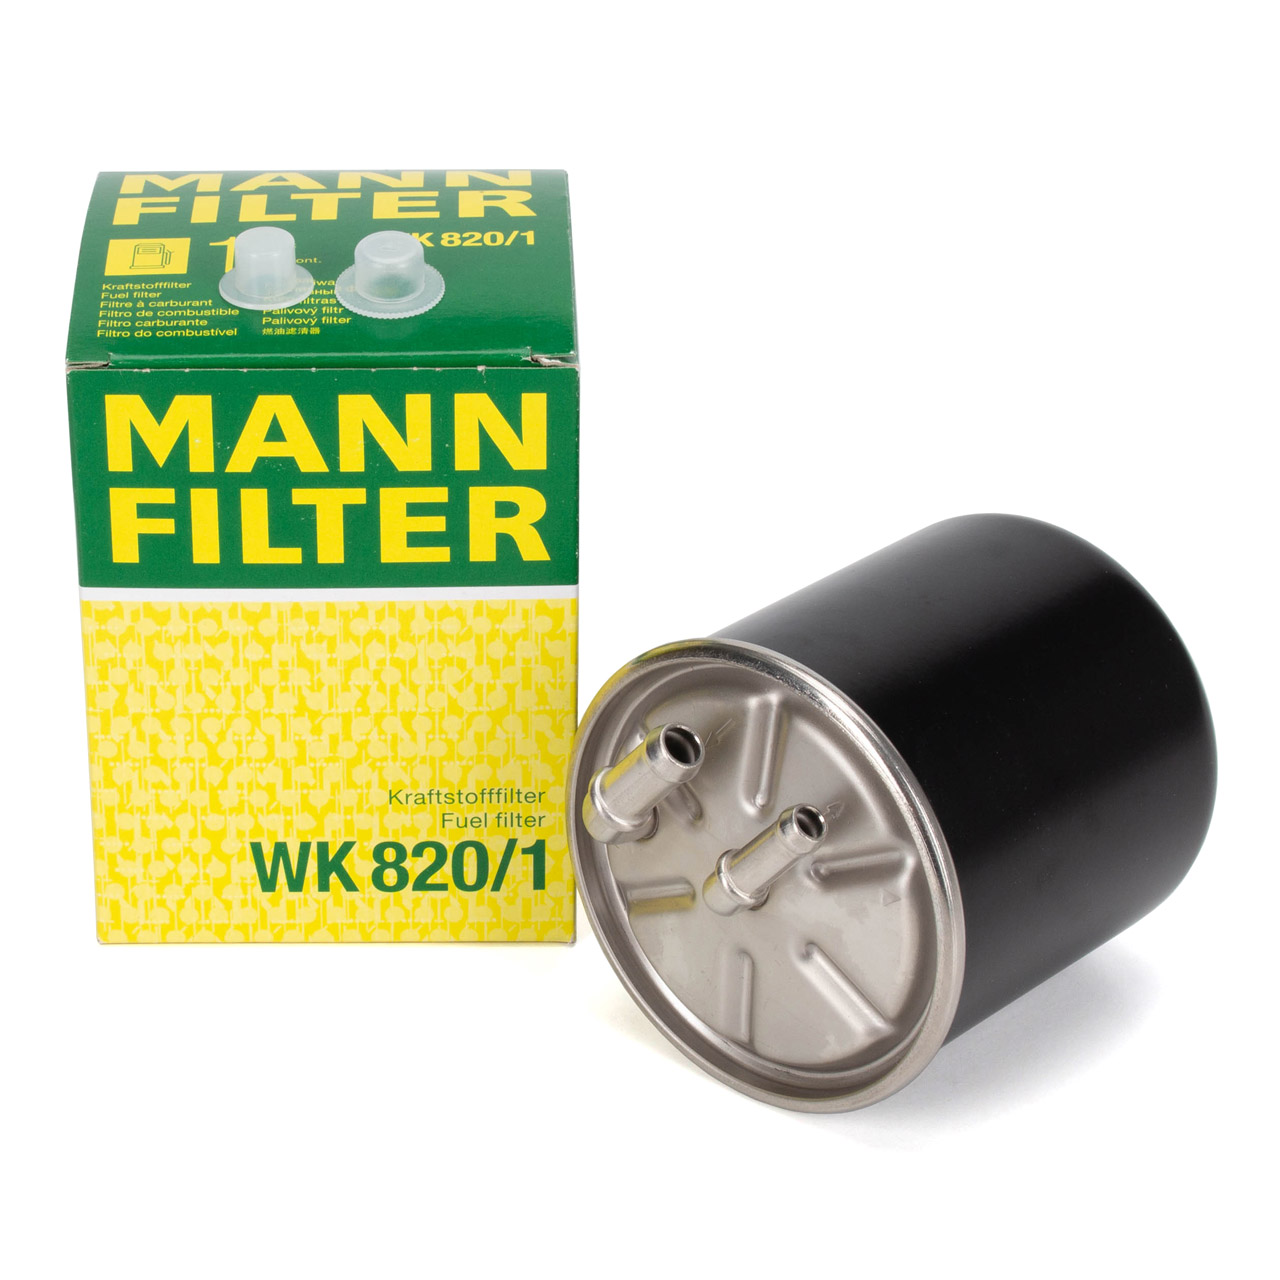 MANN-FILTER Kraftstofffilter - WK 820/1 